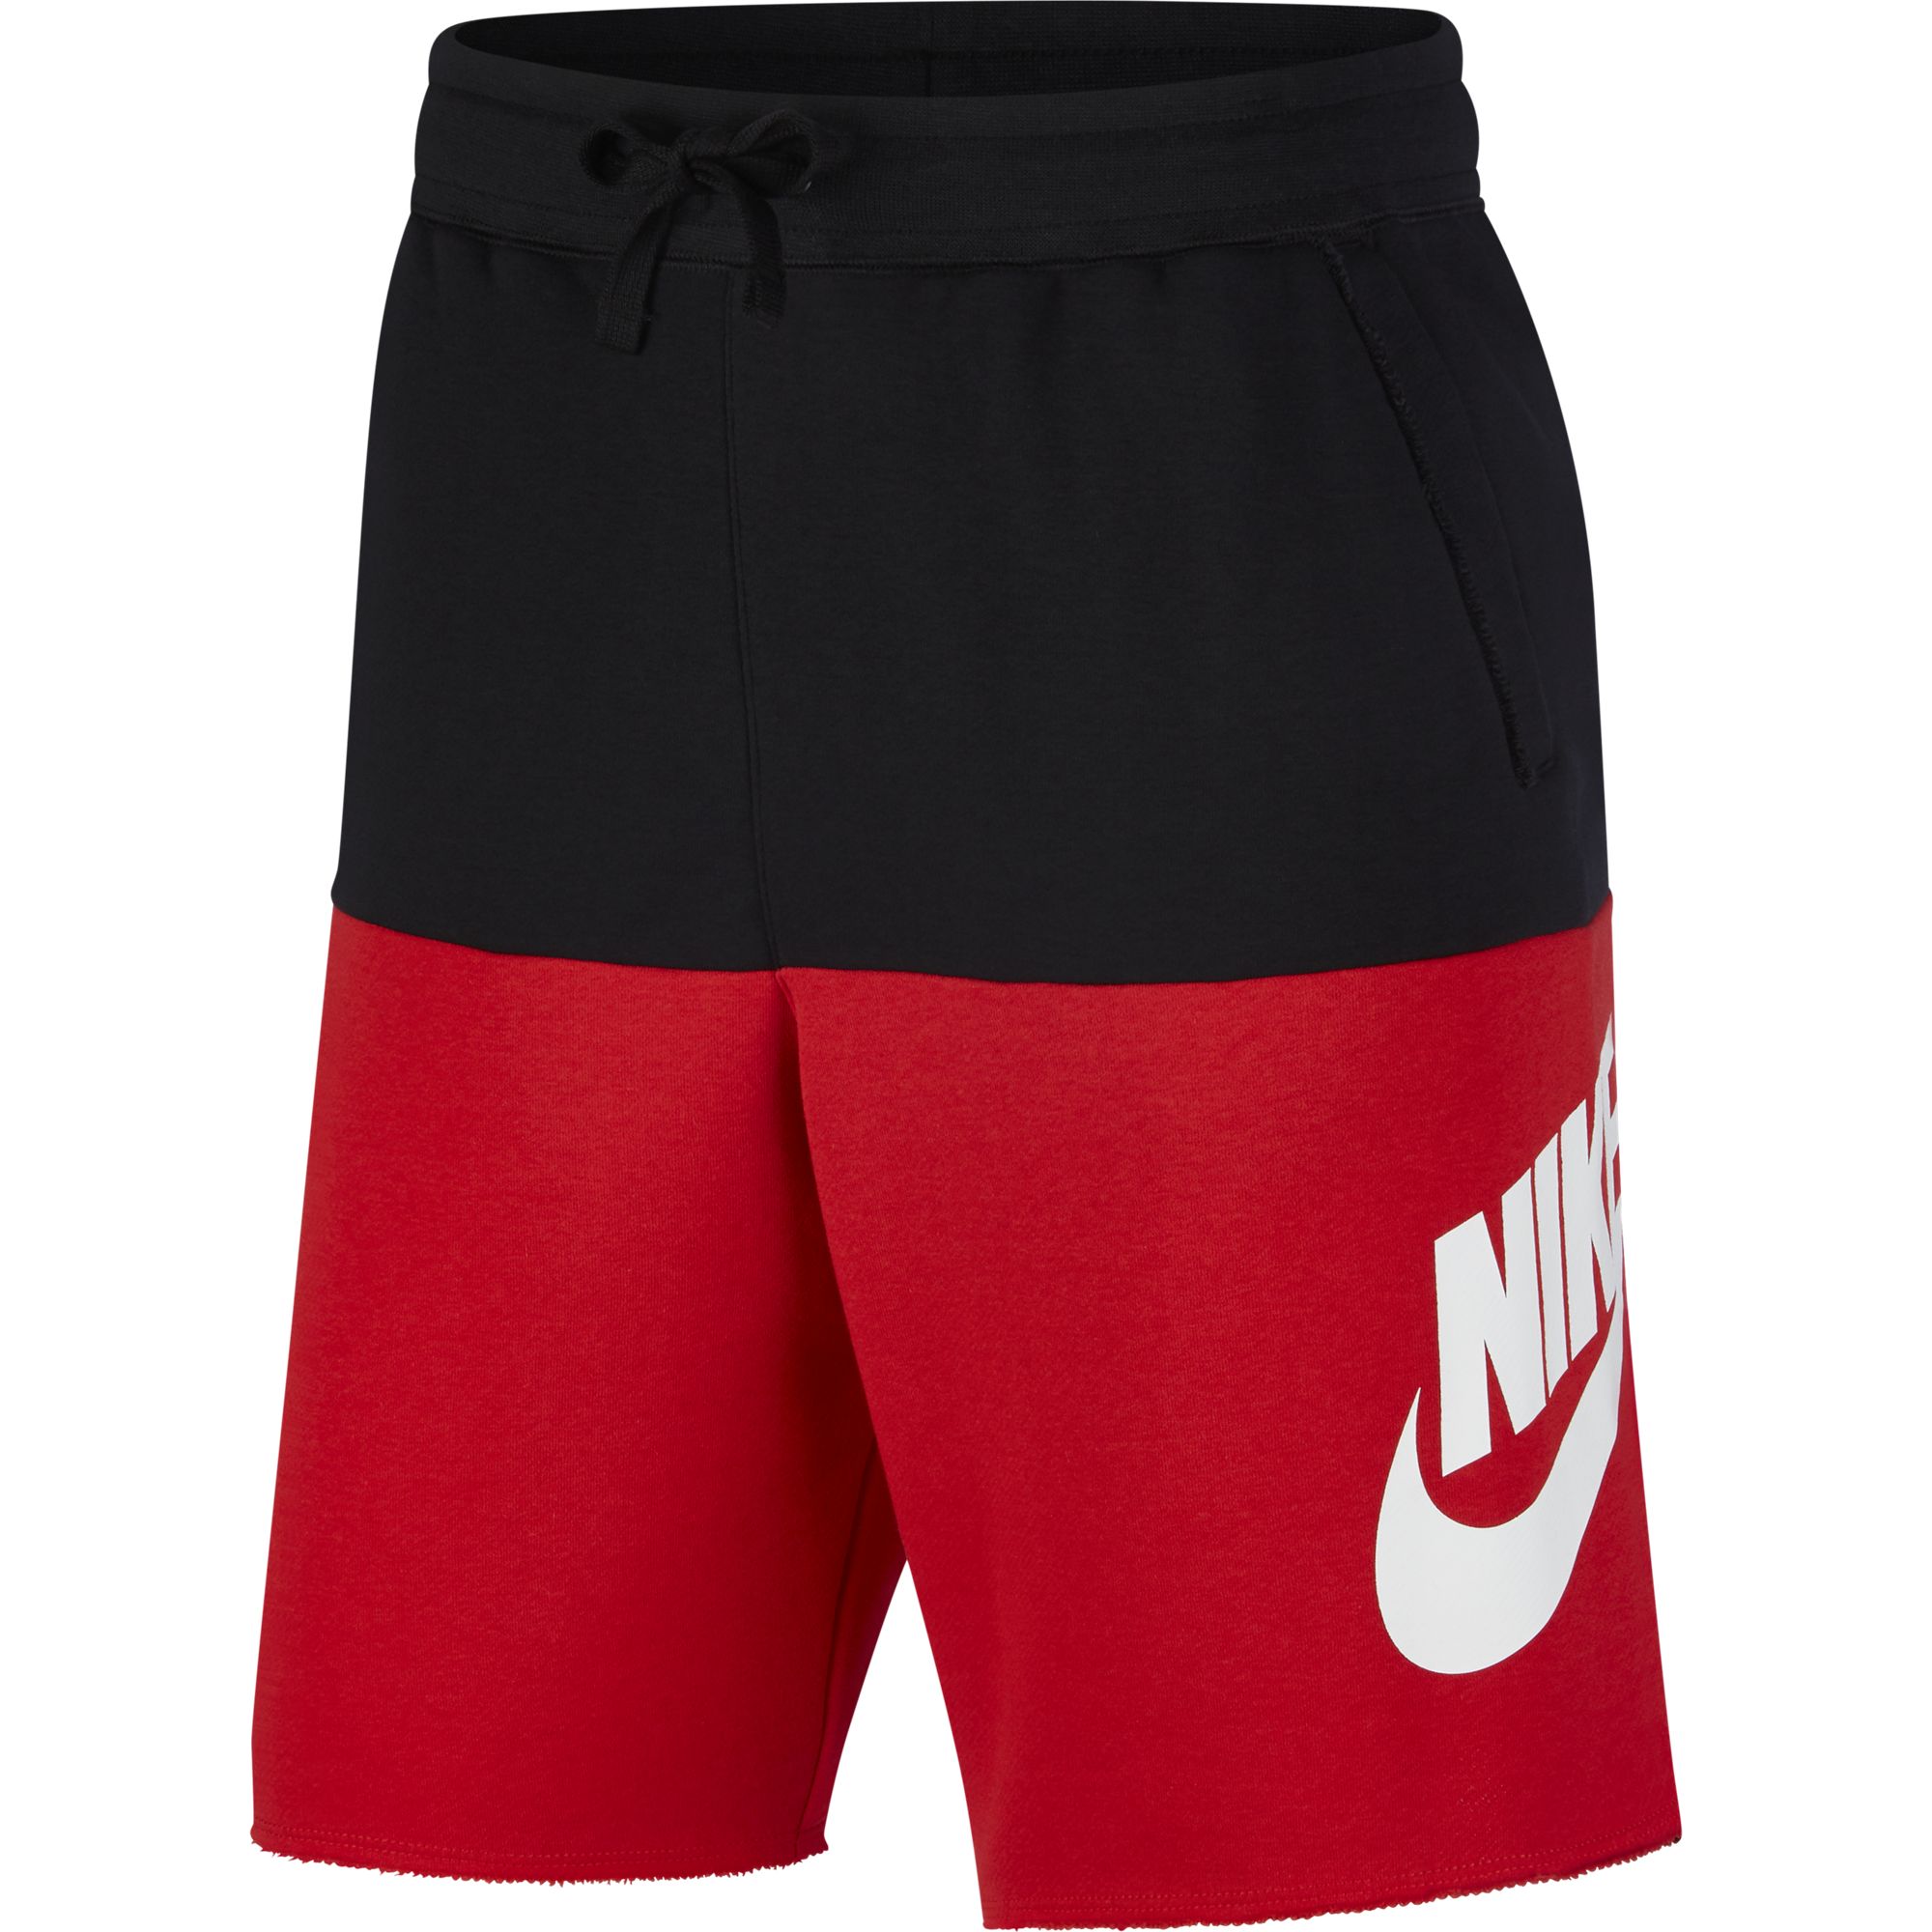 Шорты Nike Color Block. Шорты Nike Sportswear черные с красным. Nike World Tour шорты. Этикетка на шортах найк.